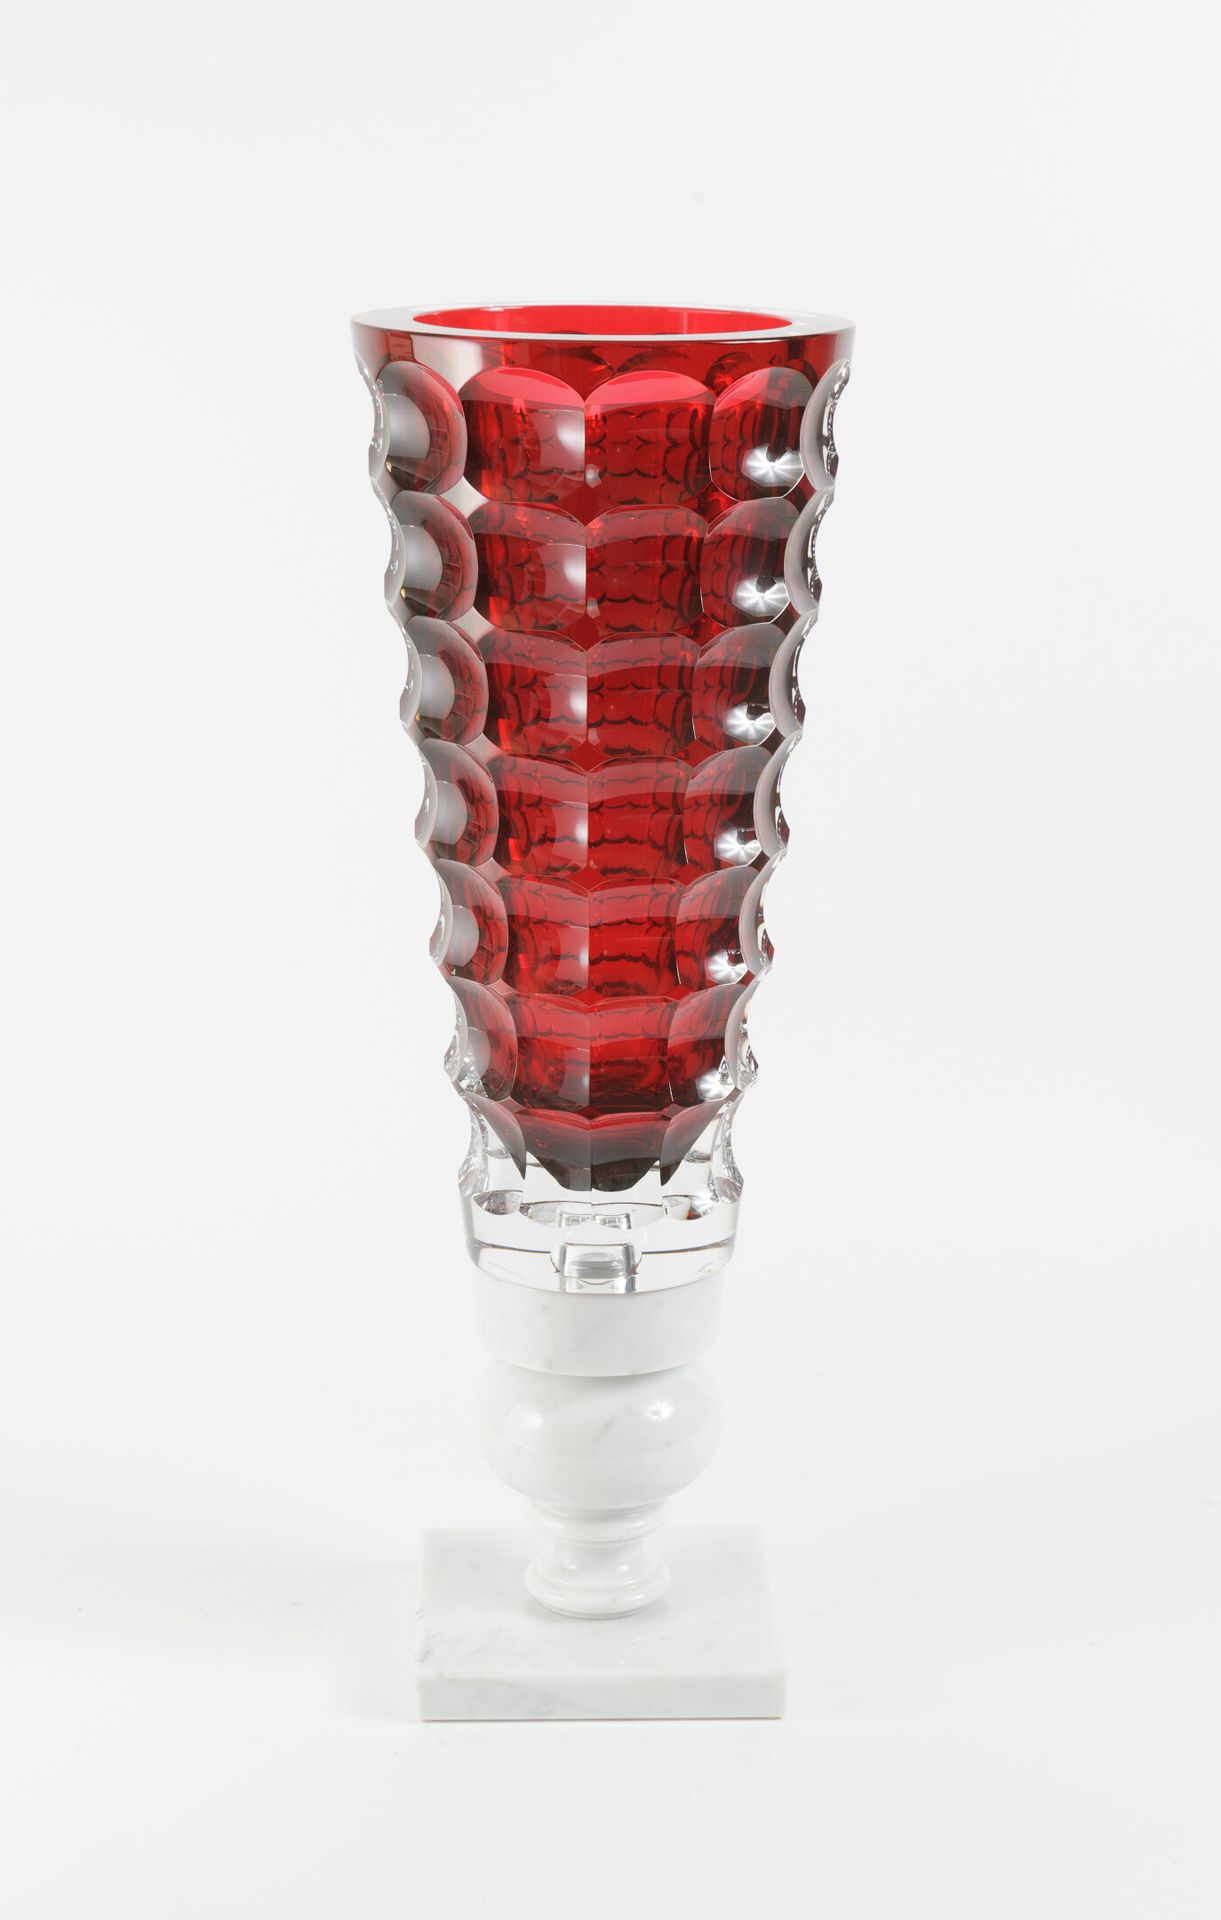 Marcel WANDERS (1963) & BACCARAT Red Vase-Kings, 2010. 

Jarrón de cristal que d&hellip;